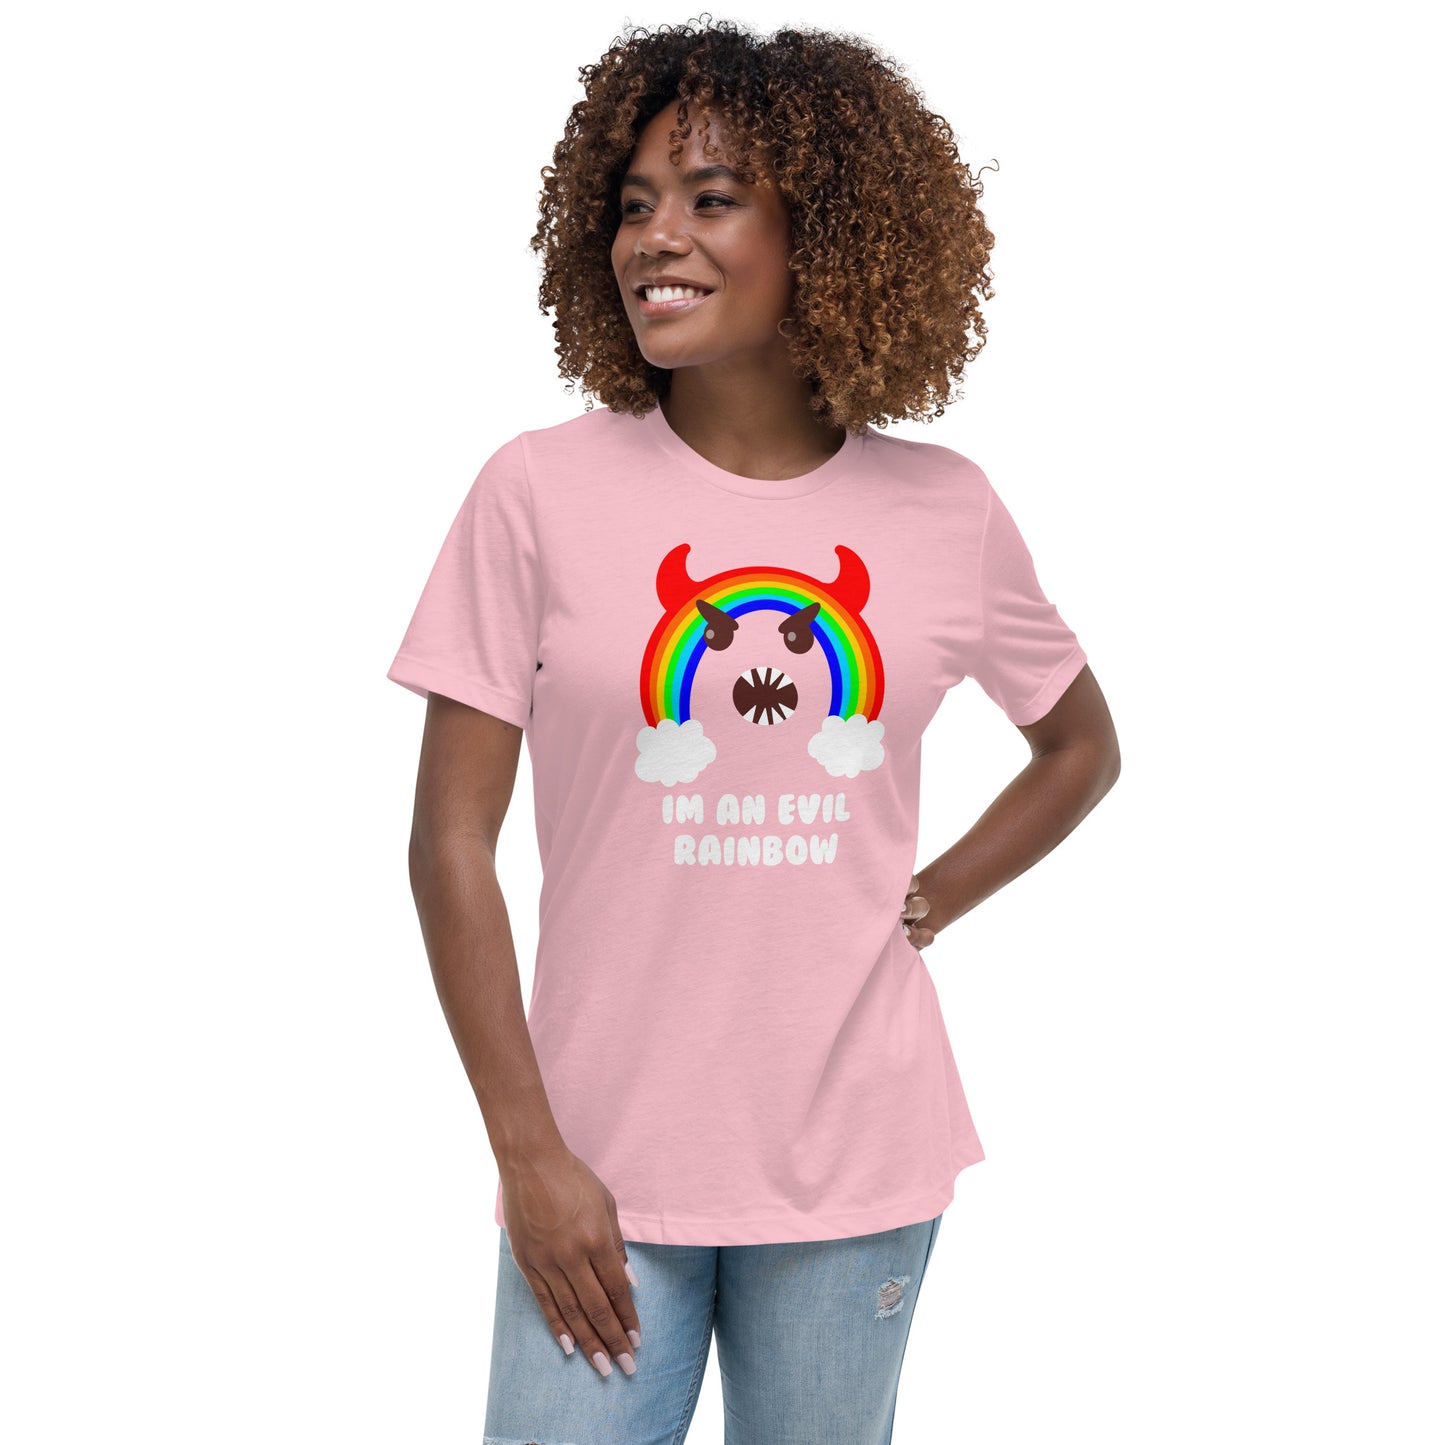 Evil Rainbow Women's Relaxed T-Shirt